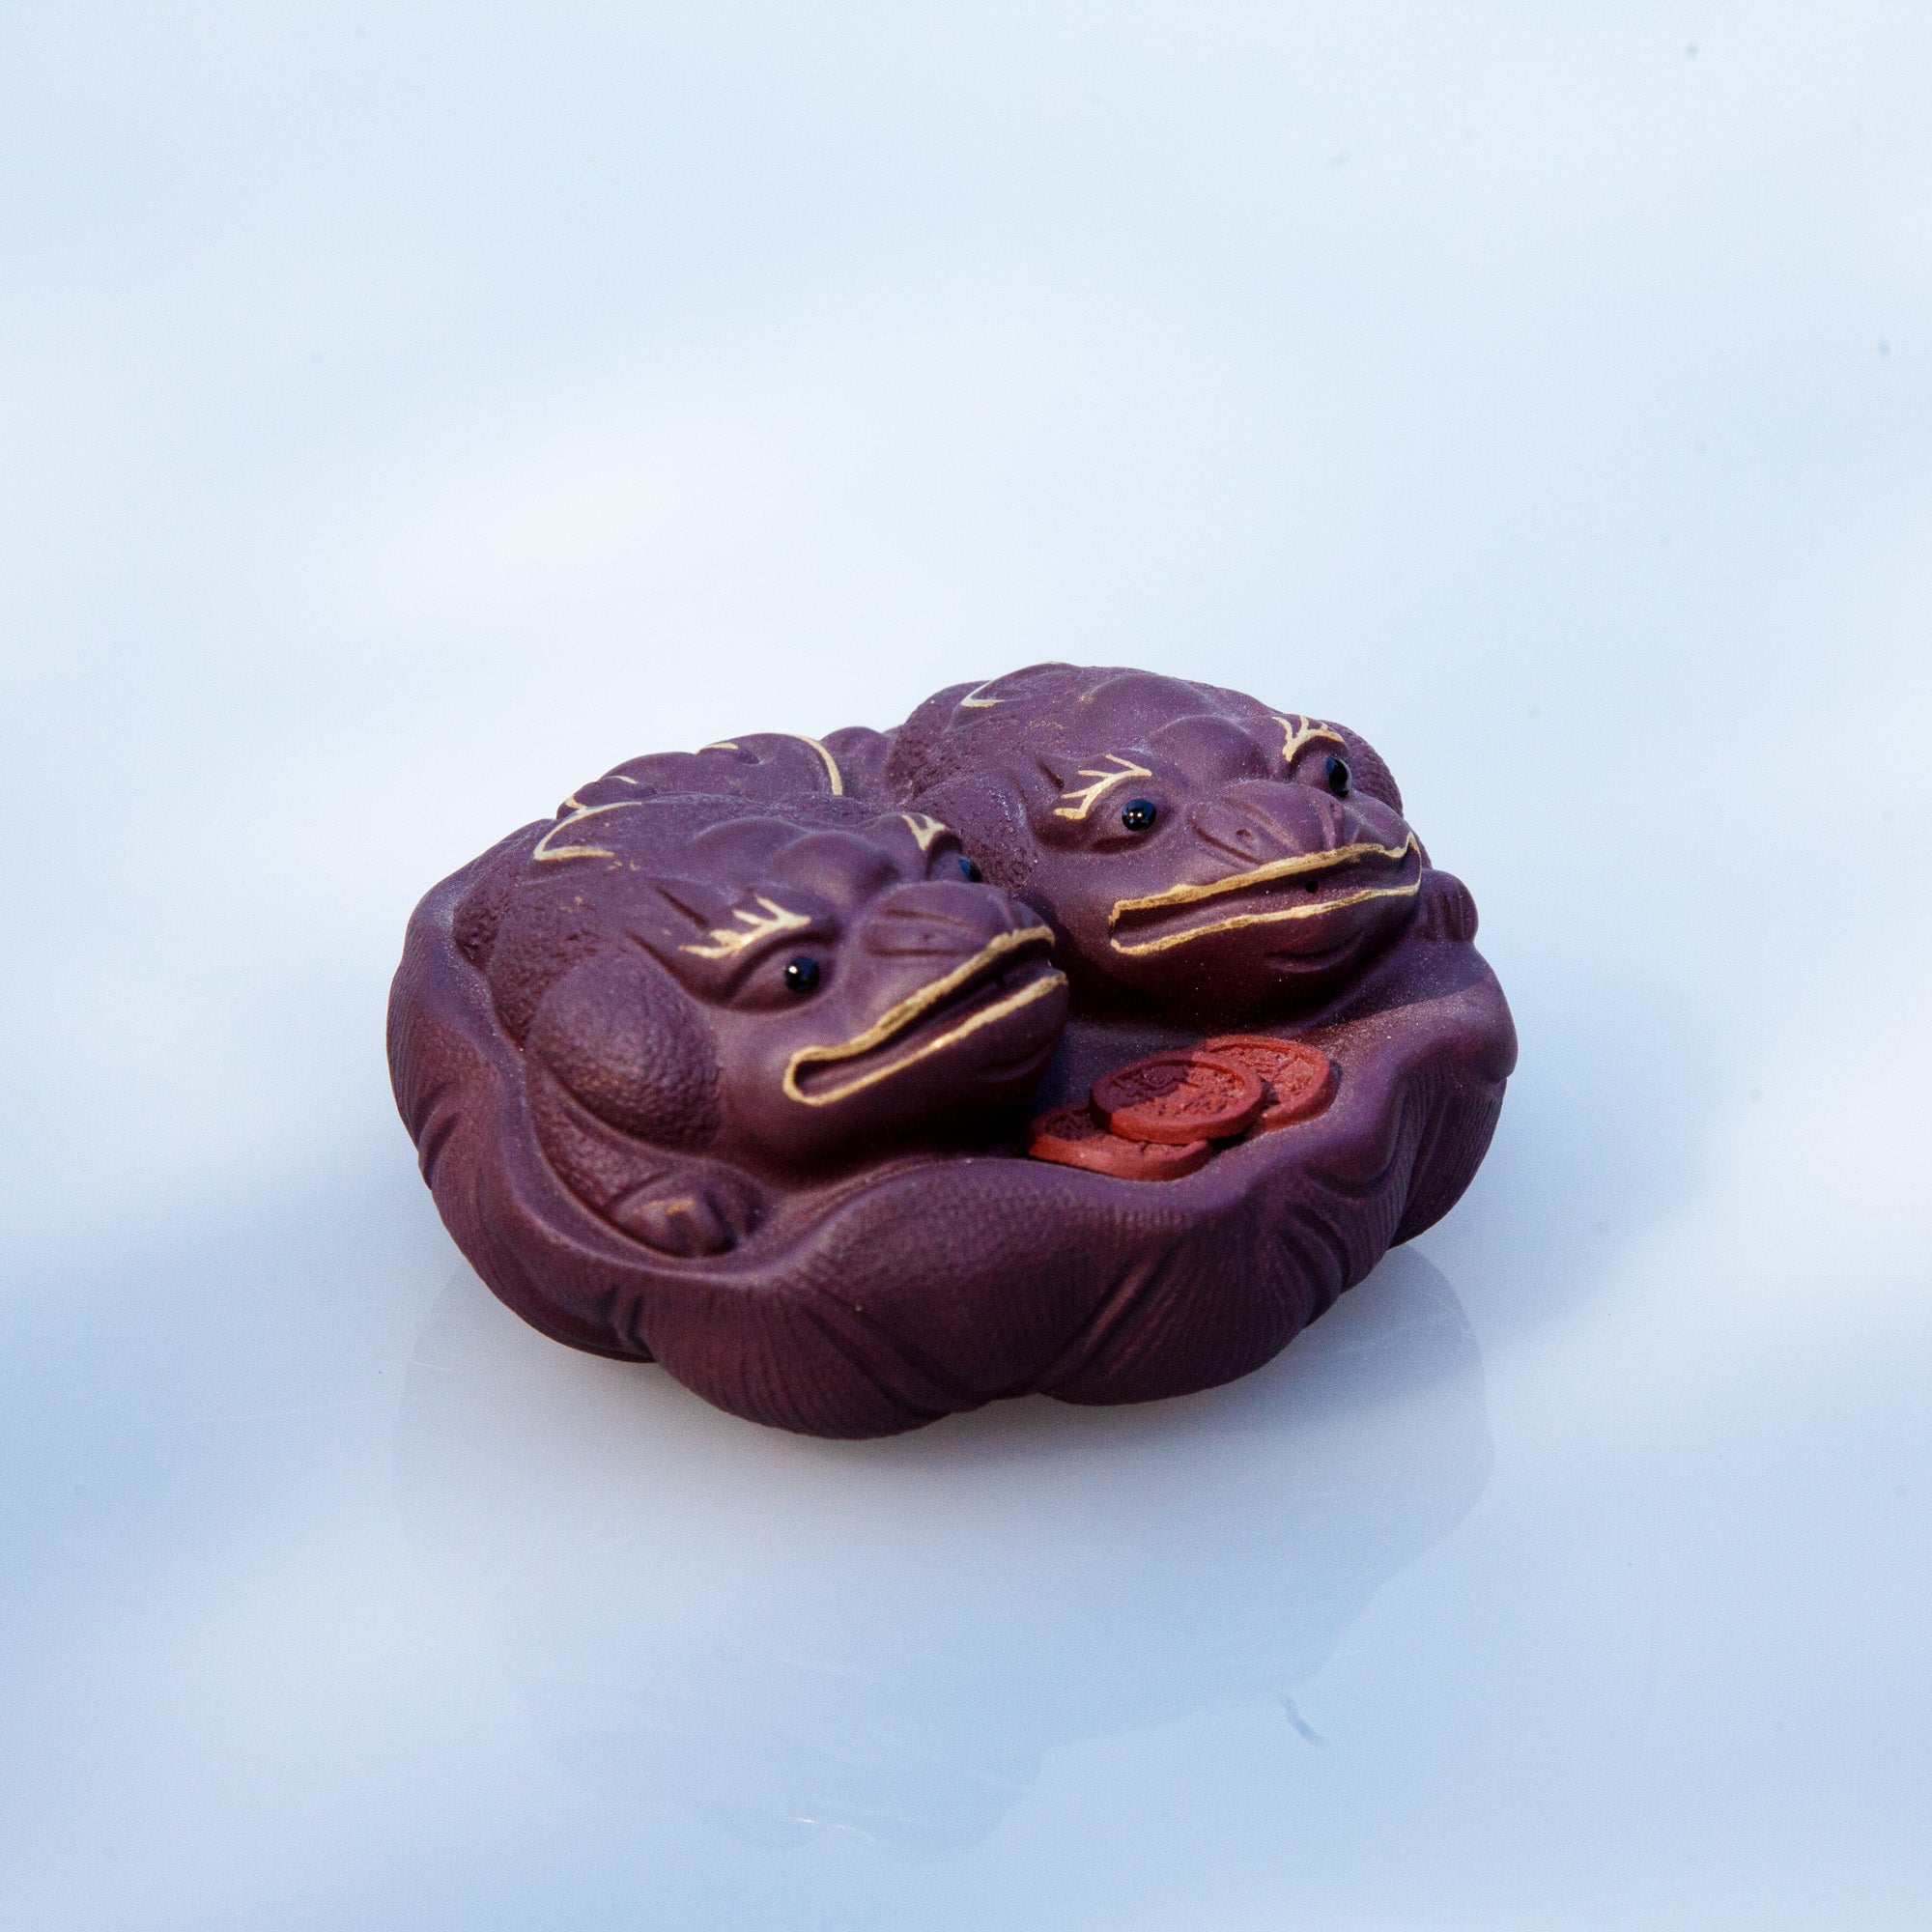 Tea Pet - Twin Toad with Golden Line